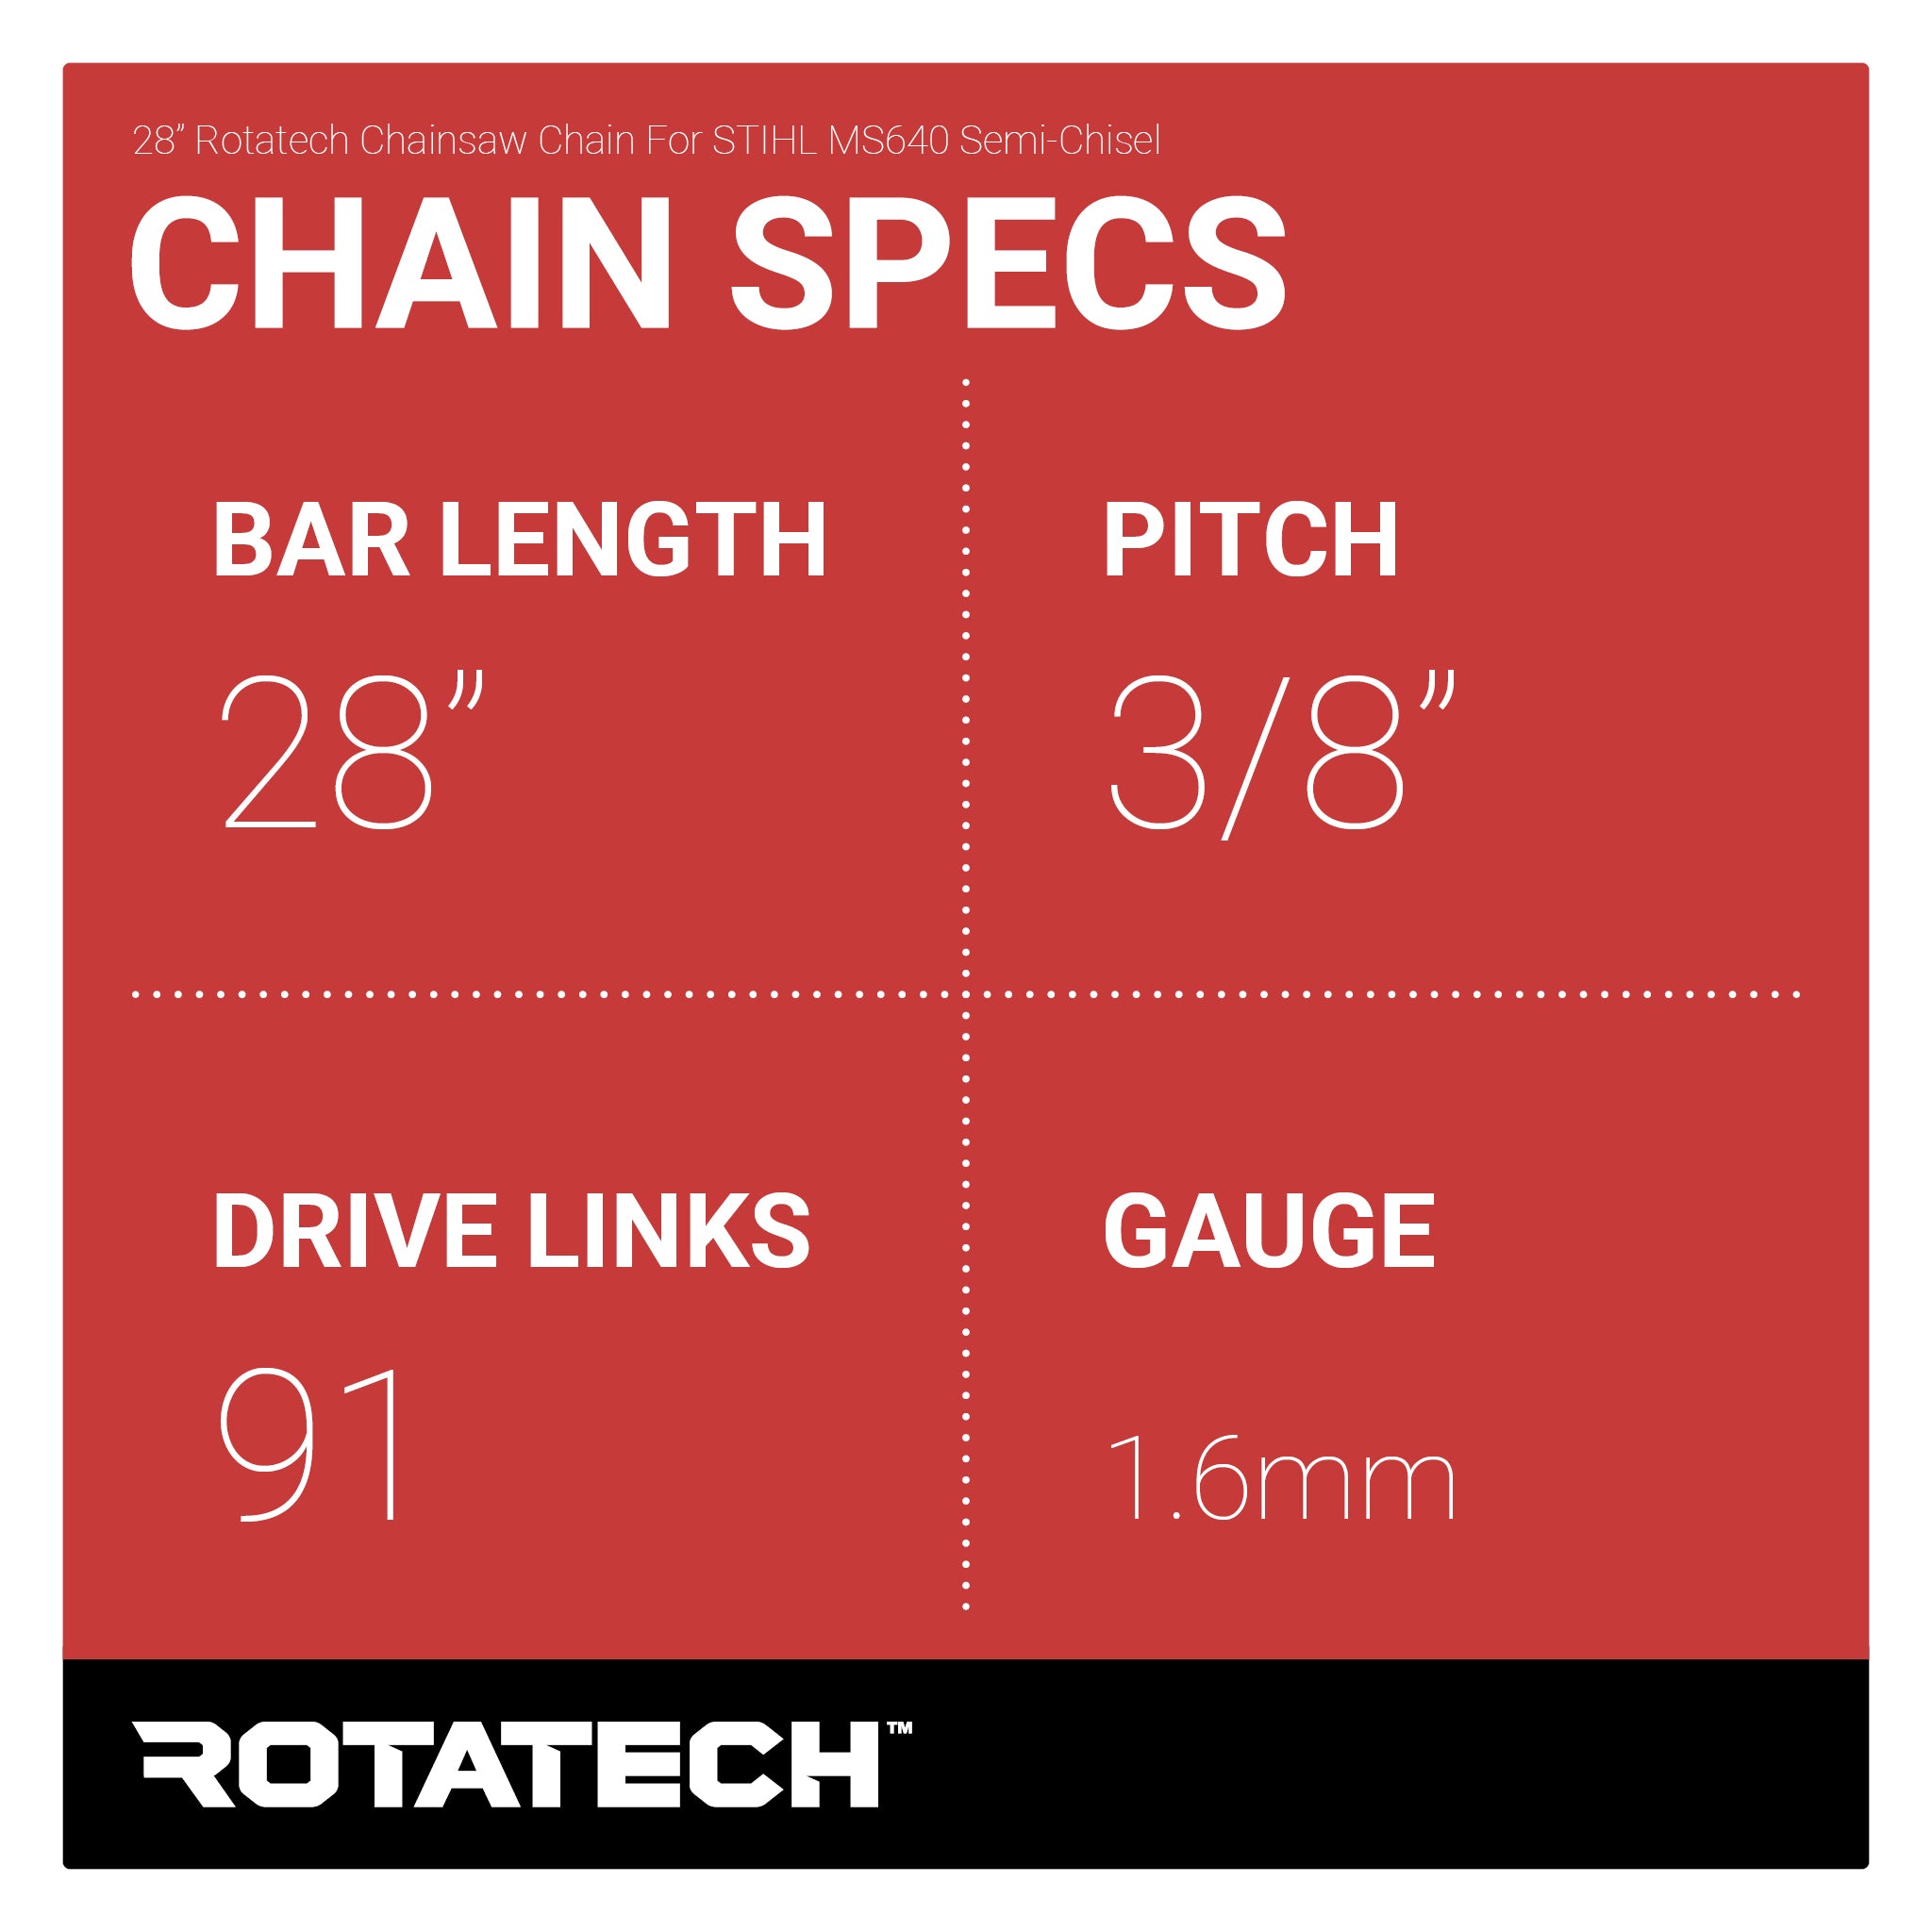 28" Rotatech Chainsaw Chain For STIHL MS640 Semi-Chisel Chain Specs